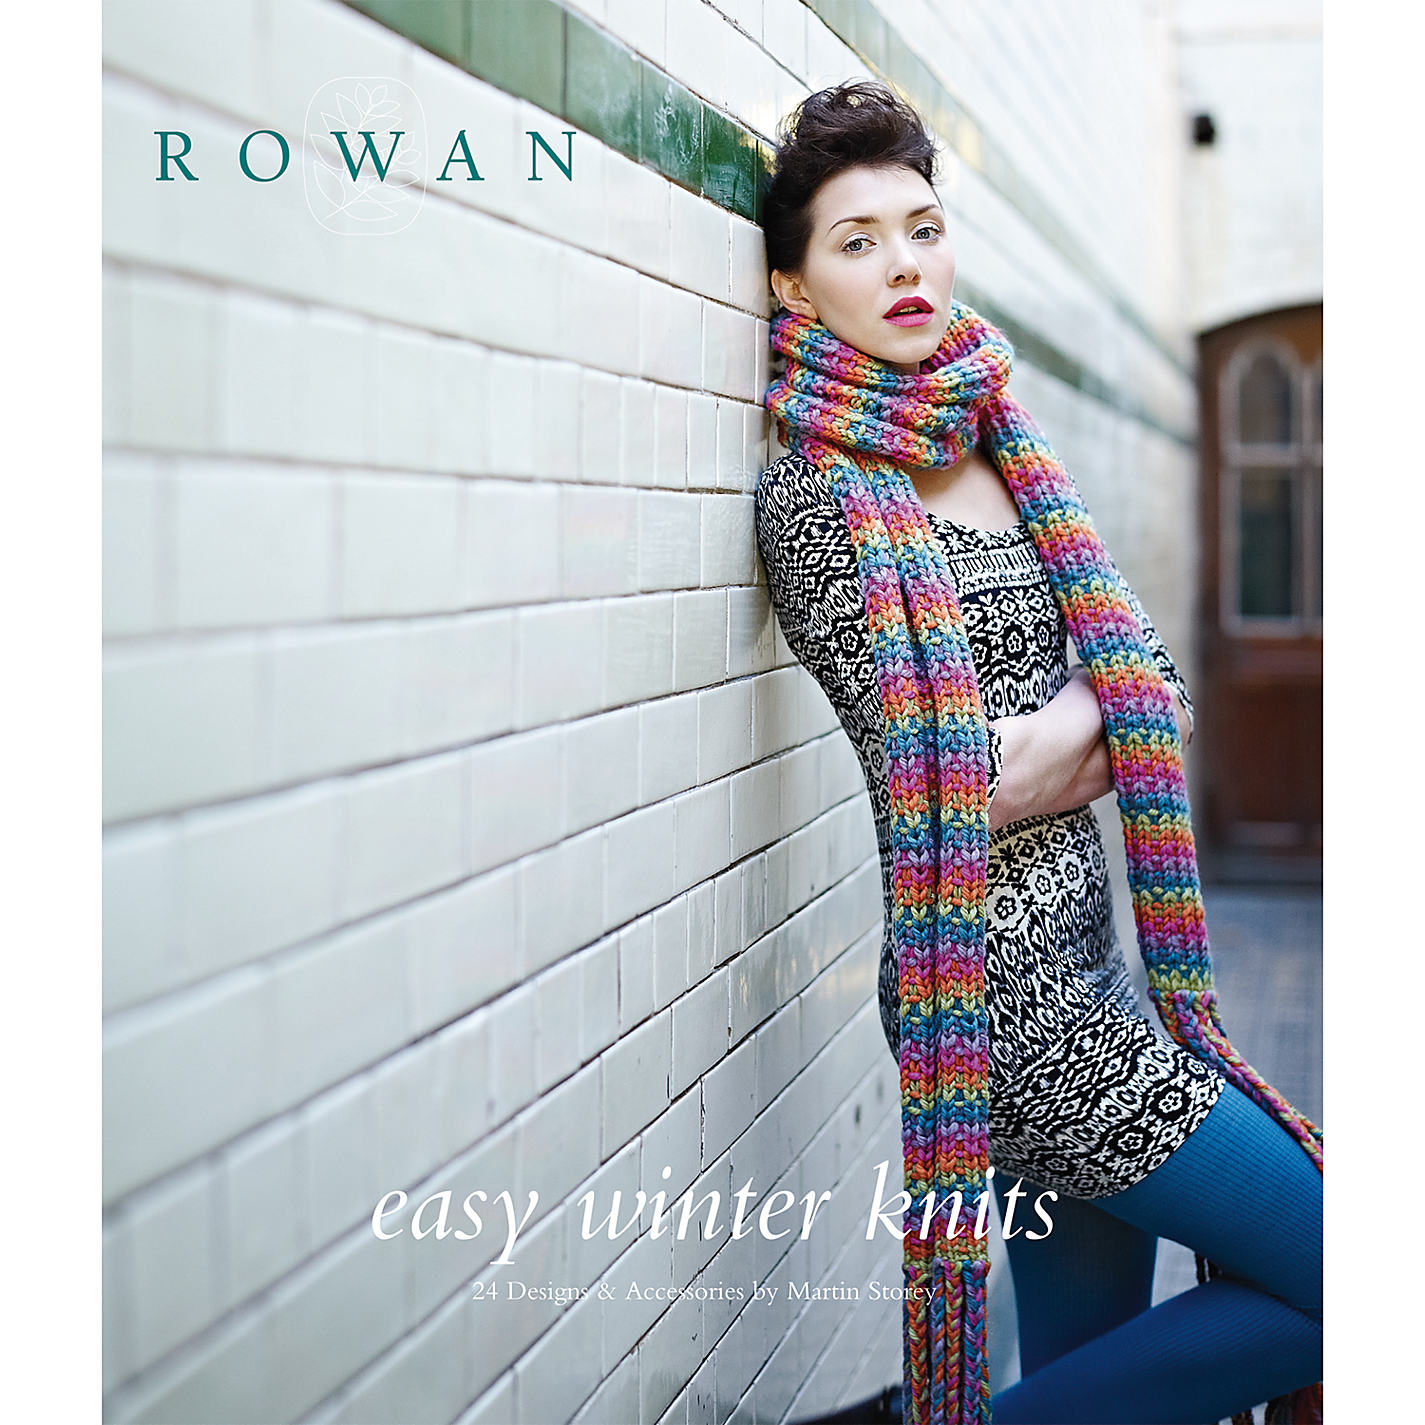 Rowan Easy Winter Knits Pattern Book by Martin Storey